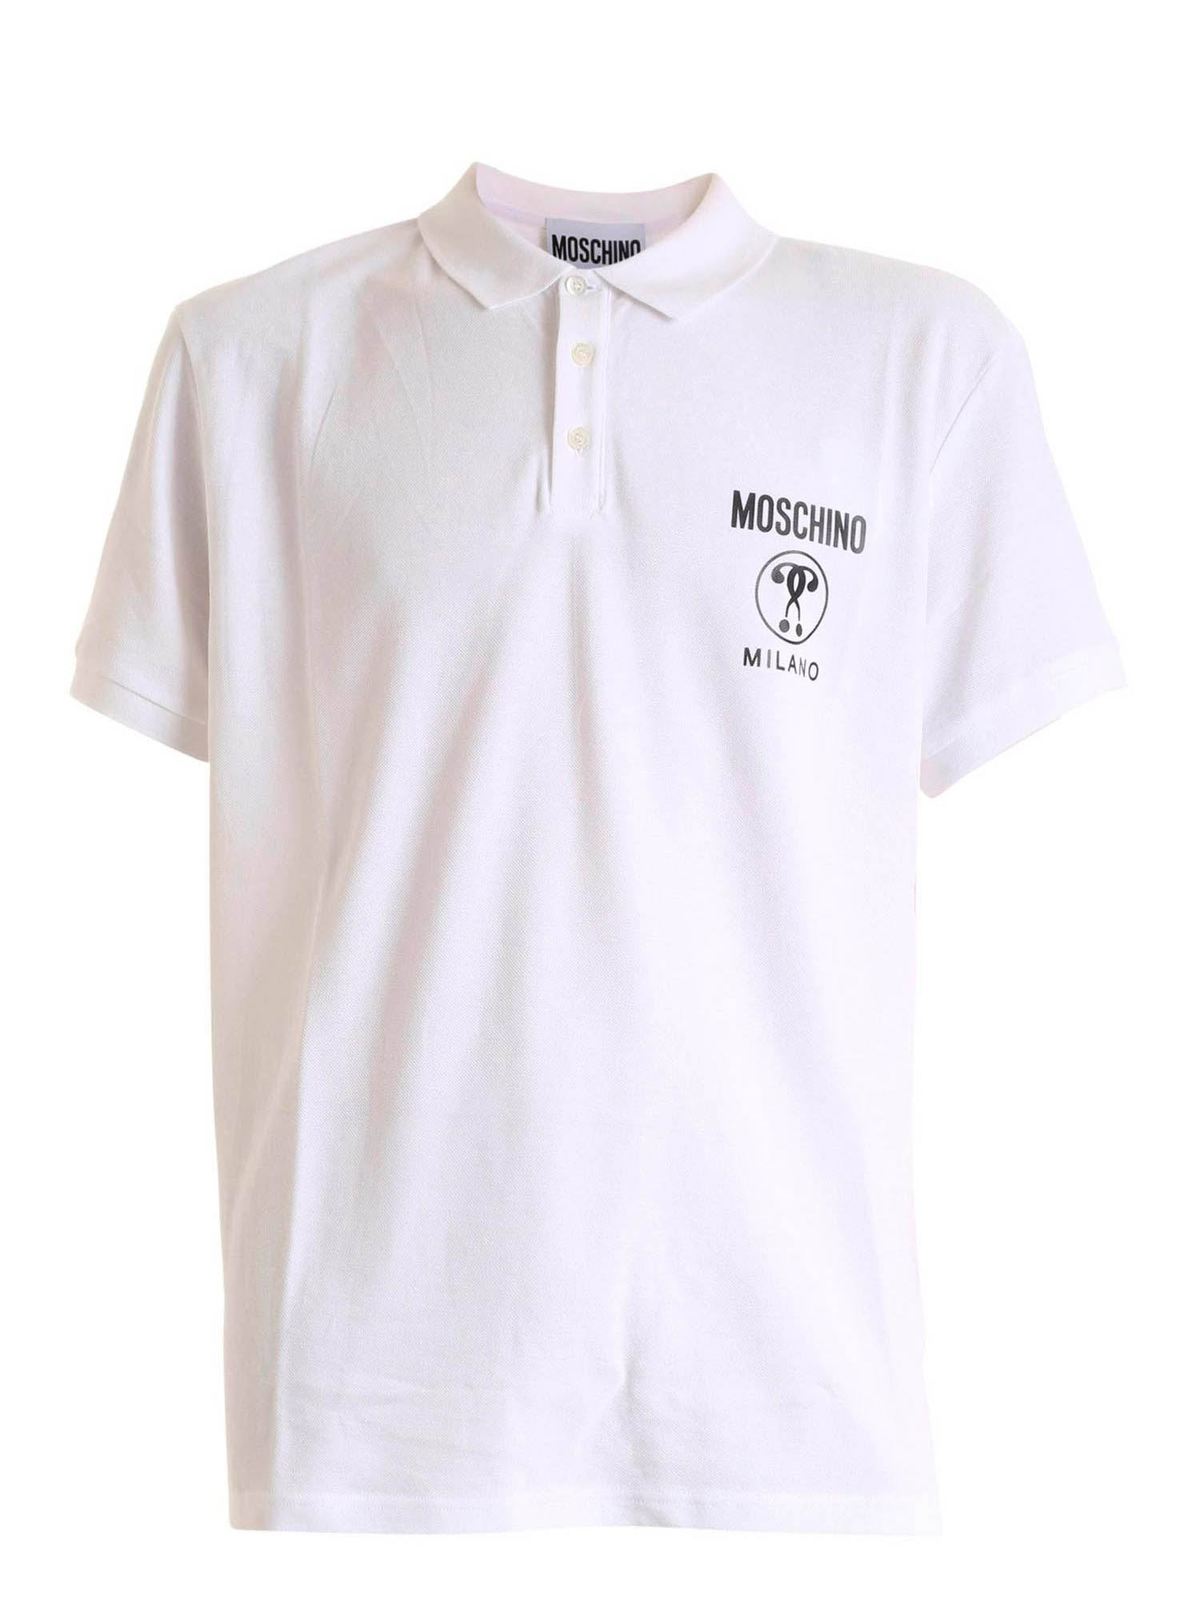 Moschino - Black logo polo shirt in 